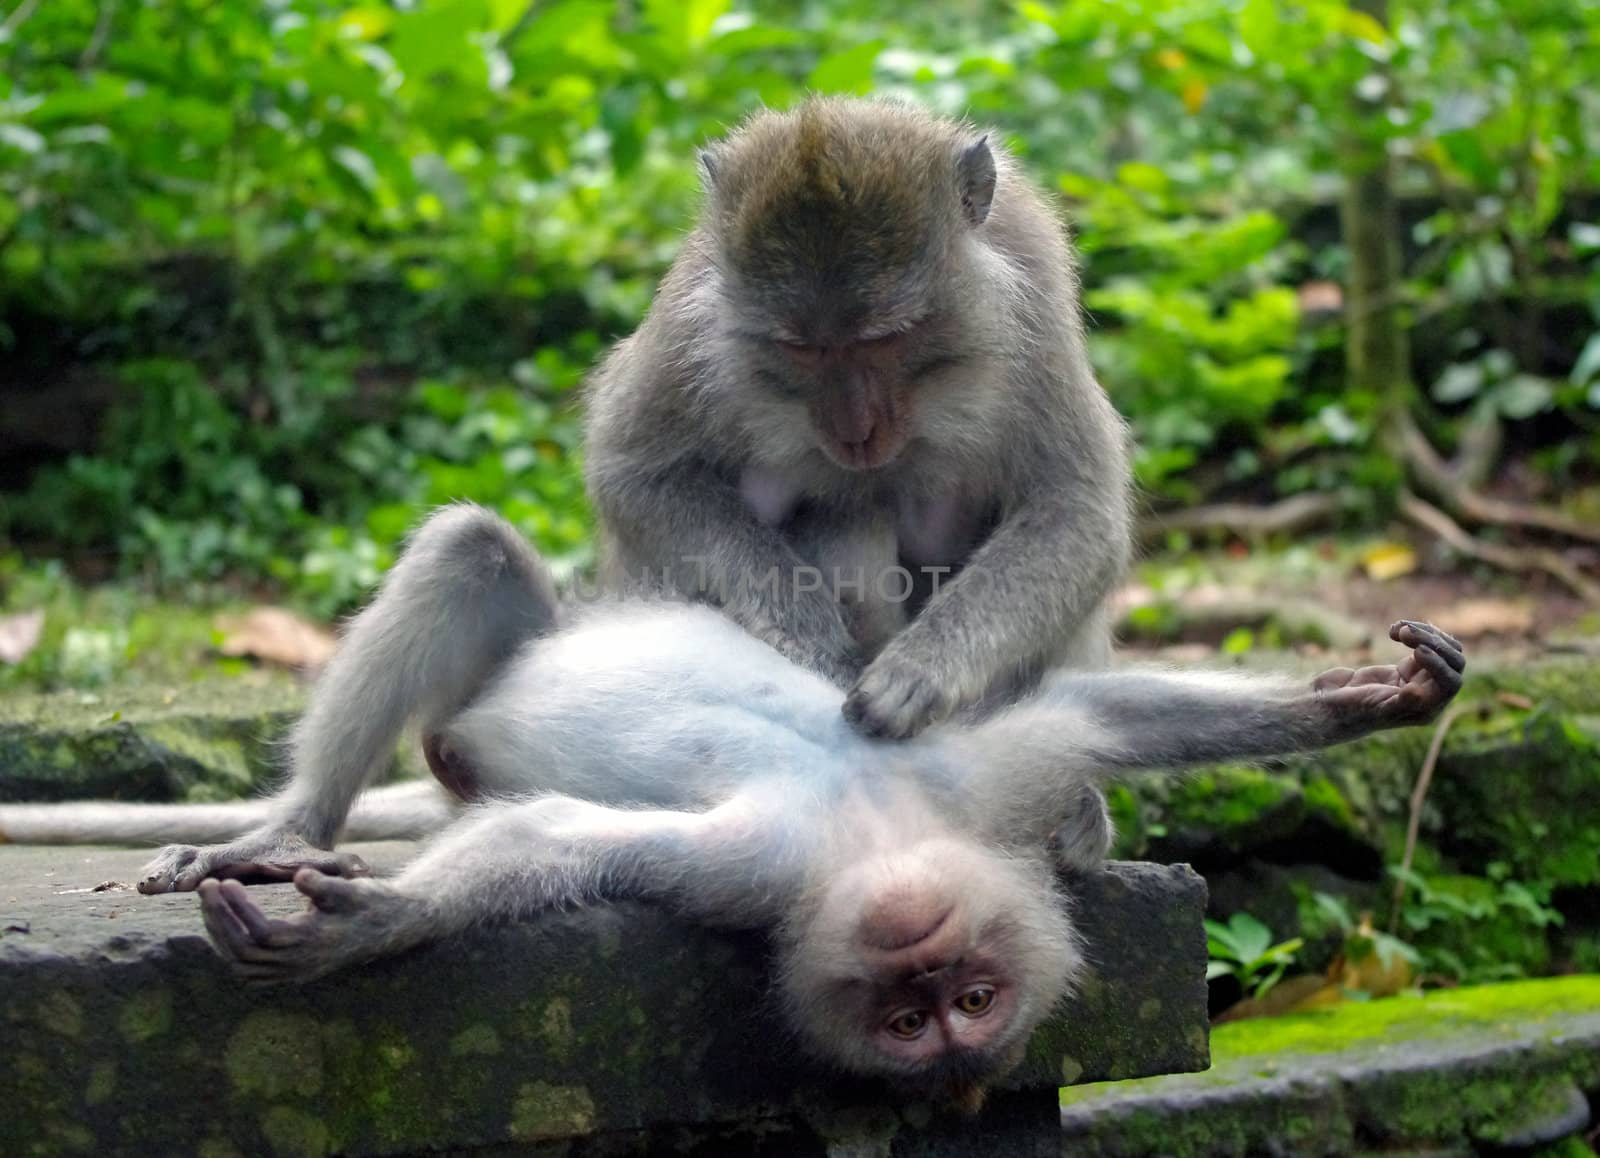 Monkey grooming another monkey in Monkey Forest, Ubud, Bali, Indonesia.